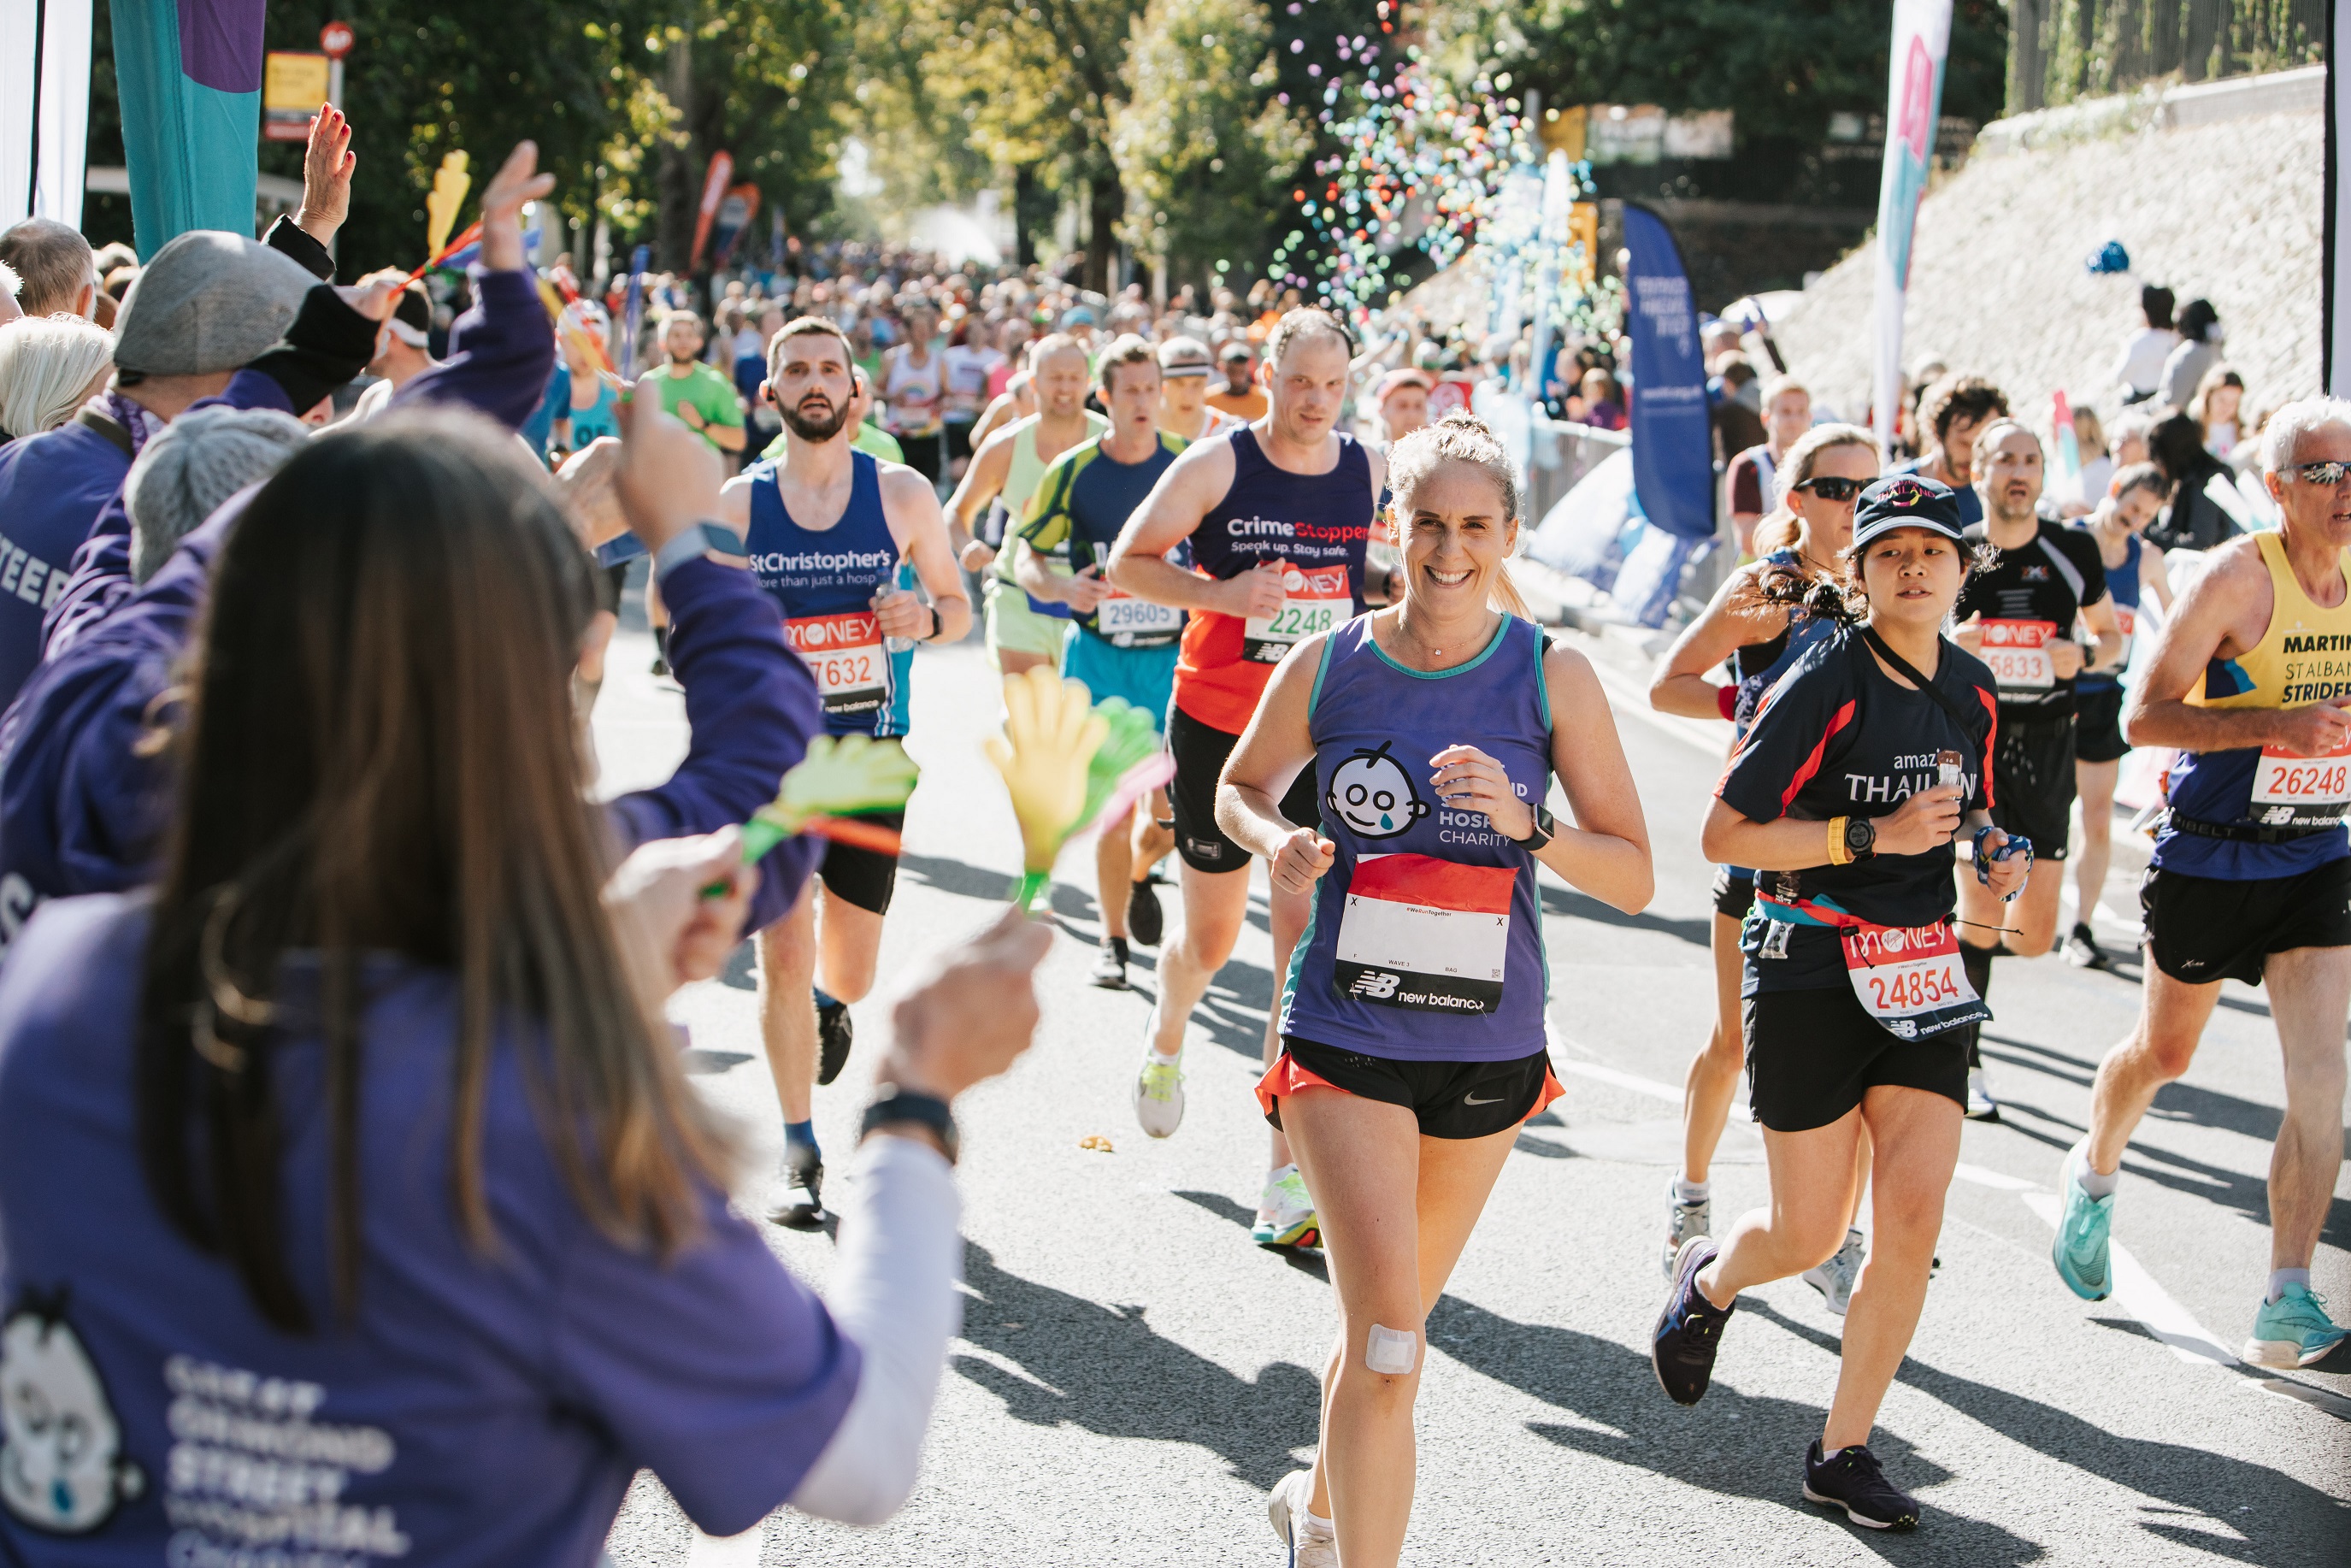 GOSH Charity named official partner for the 2023 London Marathon